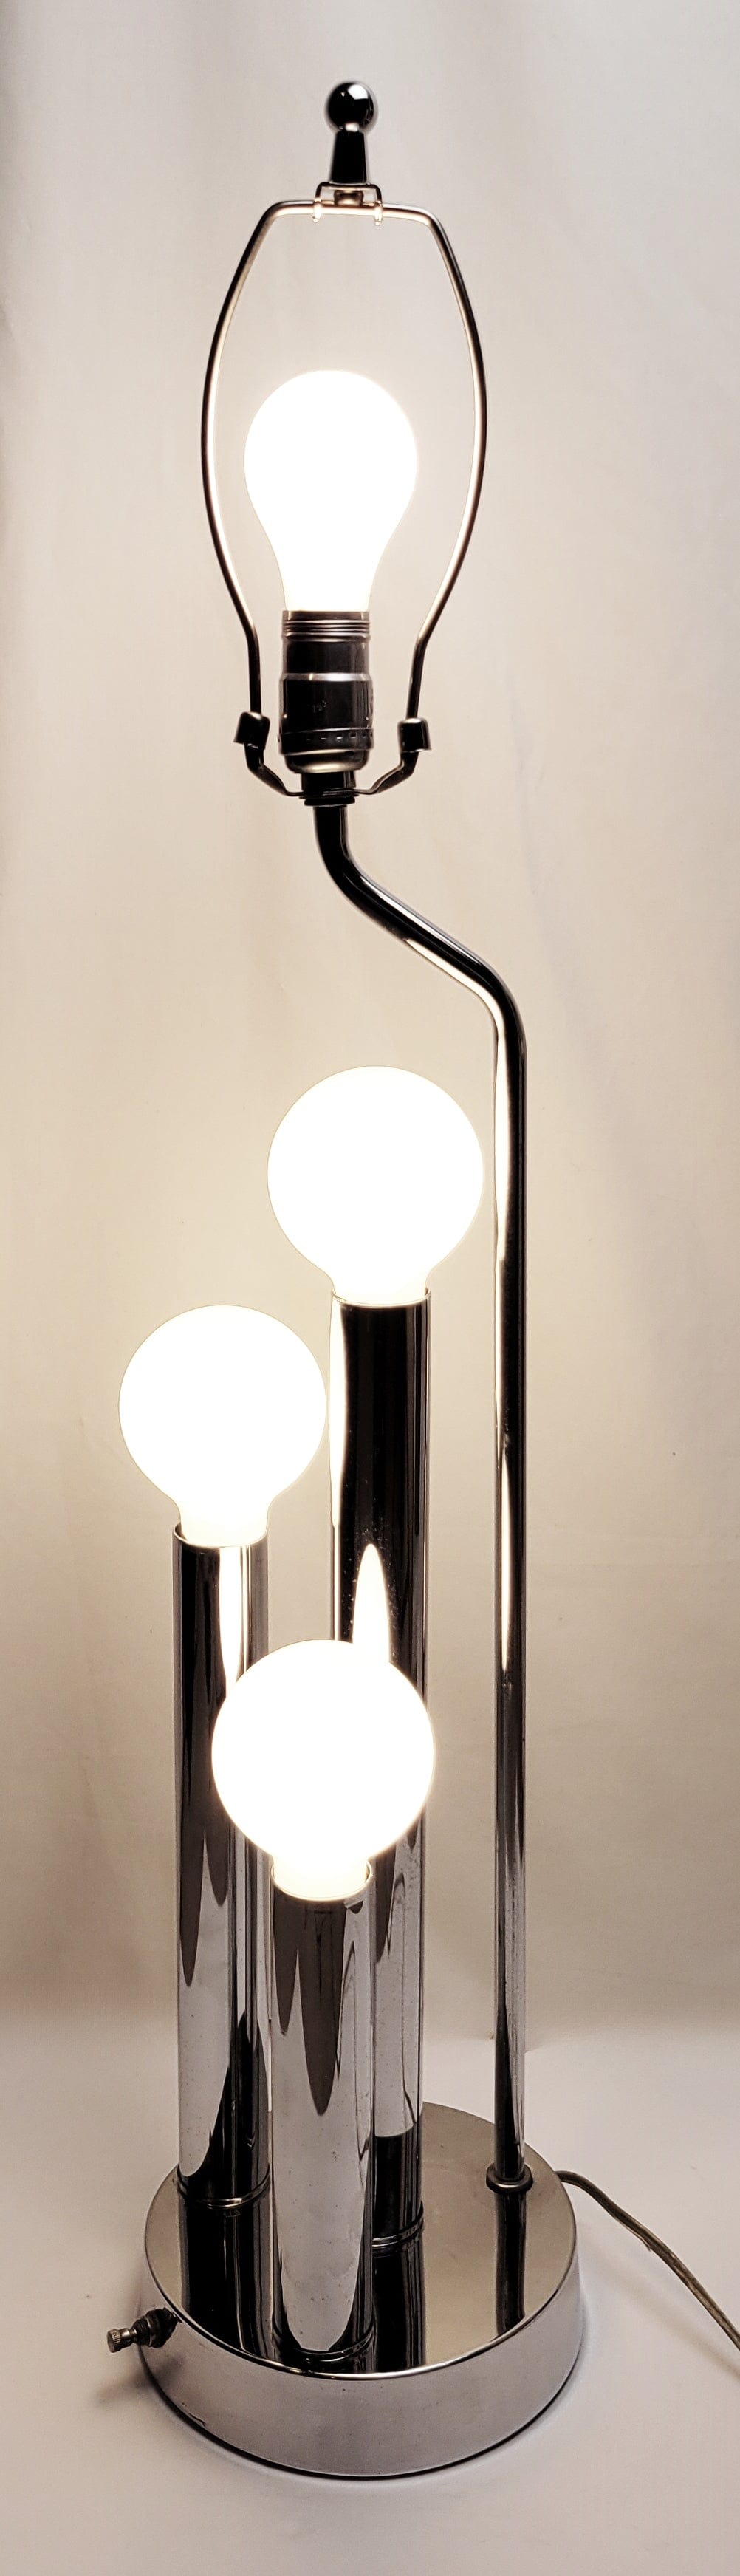 Robert Sonneman Lighting MCM Robert Sonneman Modernist 4 Pillar Tall Architectural Table Lamp 1960/70s